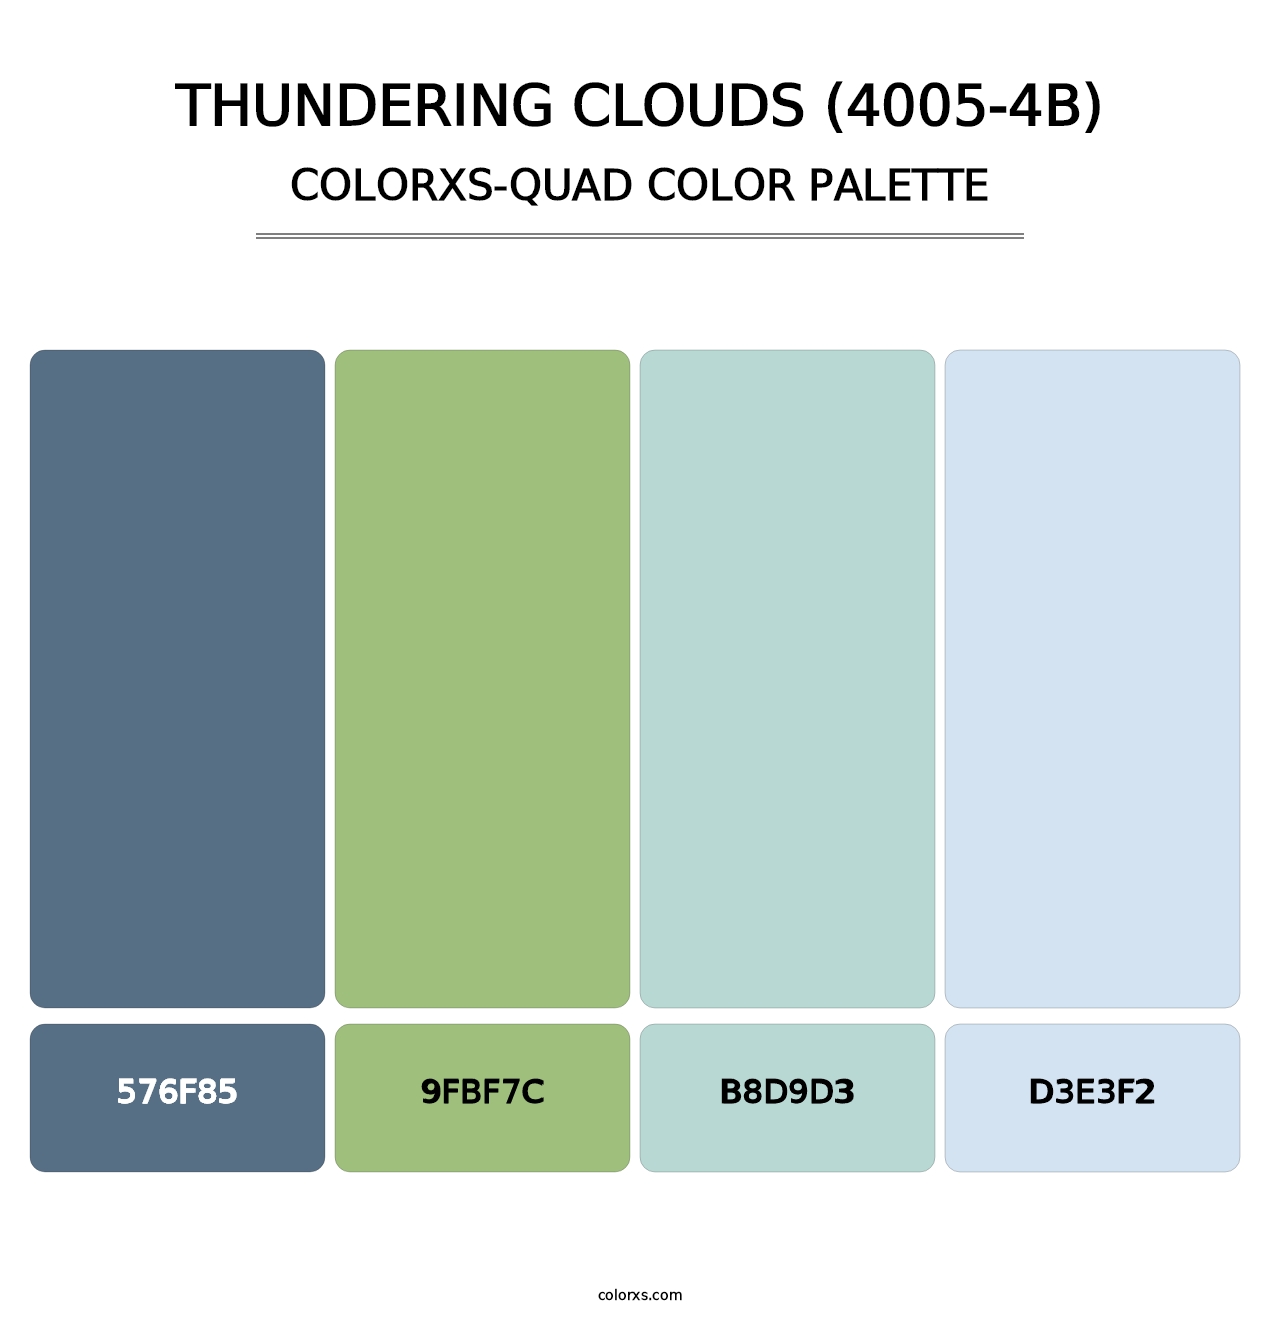 Thundering Clouds (4005-4B) - Colorxs Quad Palette